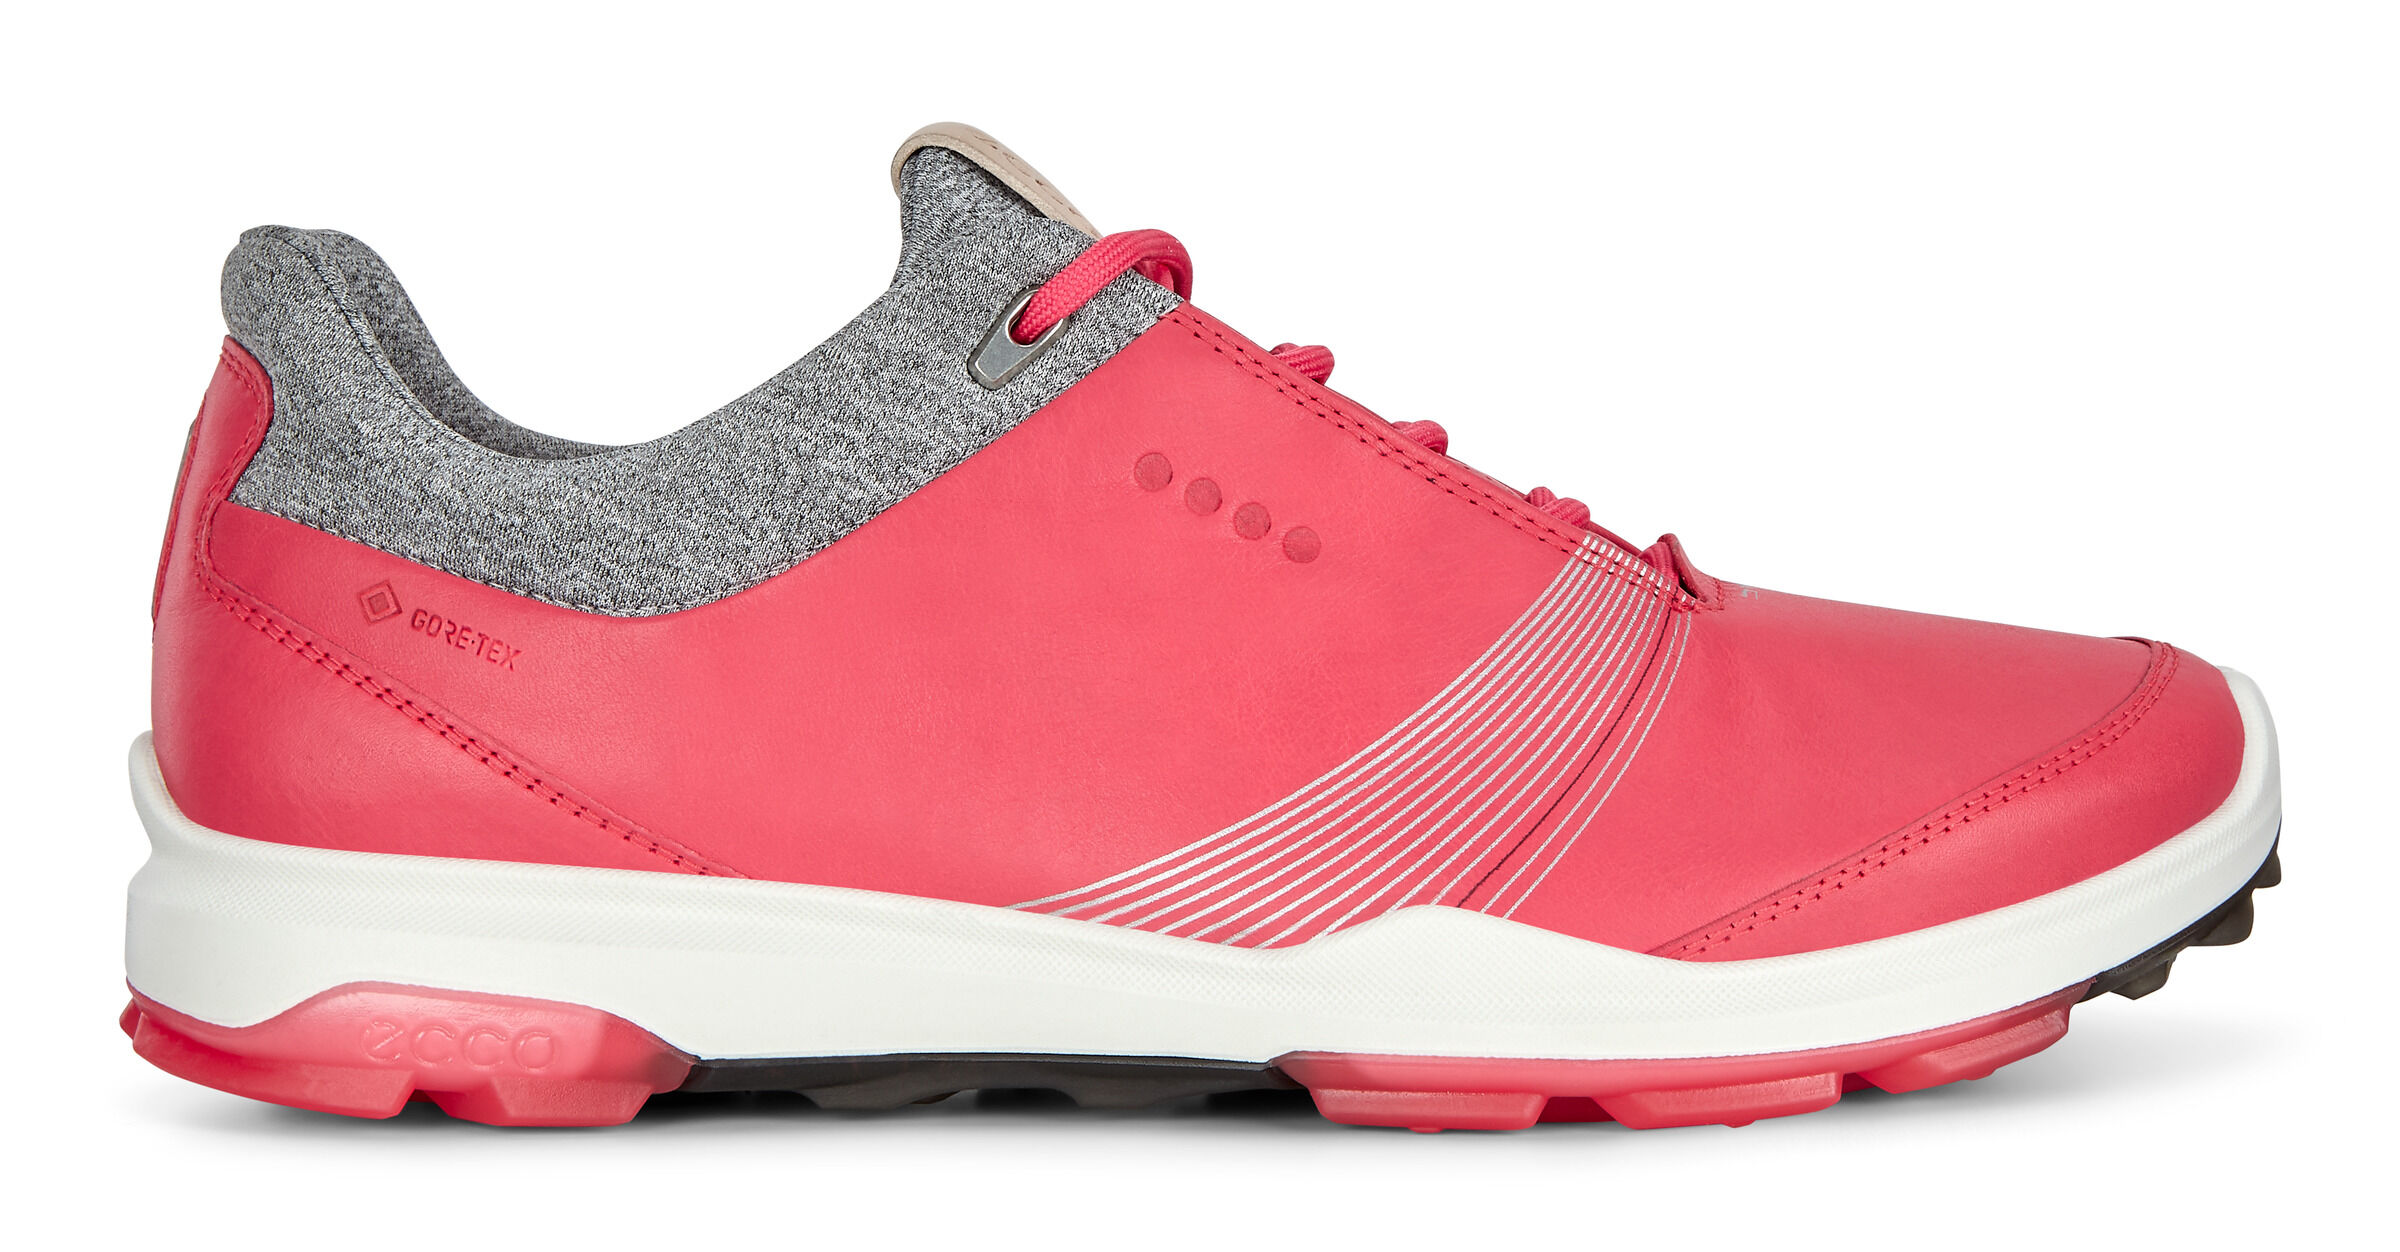 ecco golf shoes womens sale